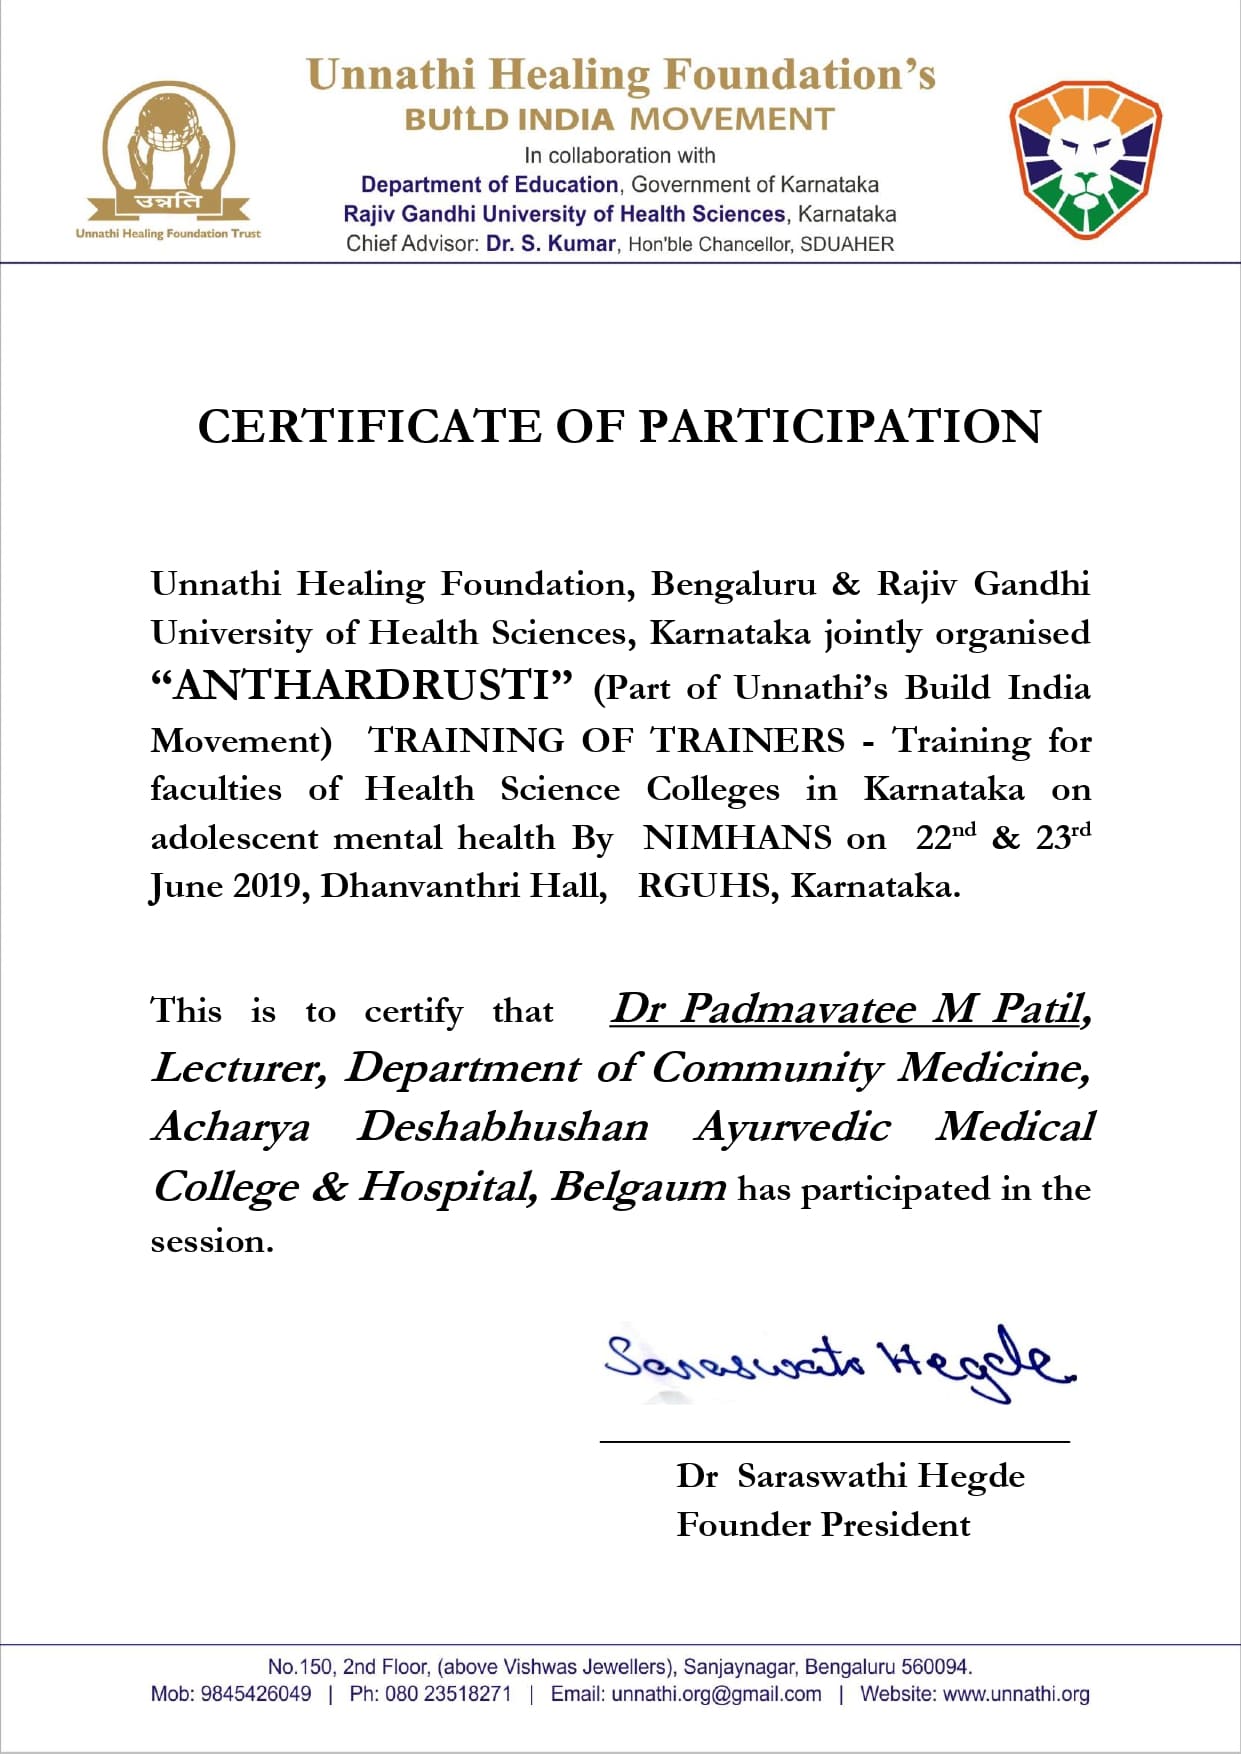 Achievement By Dr. Padmavtee M. Patil	